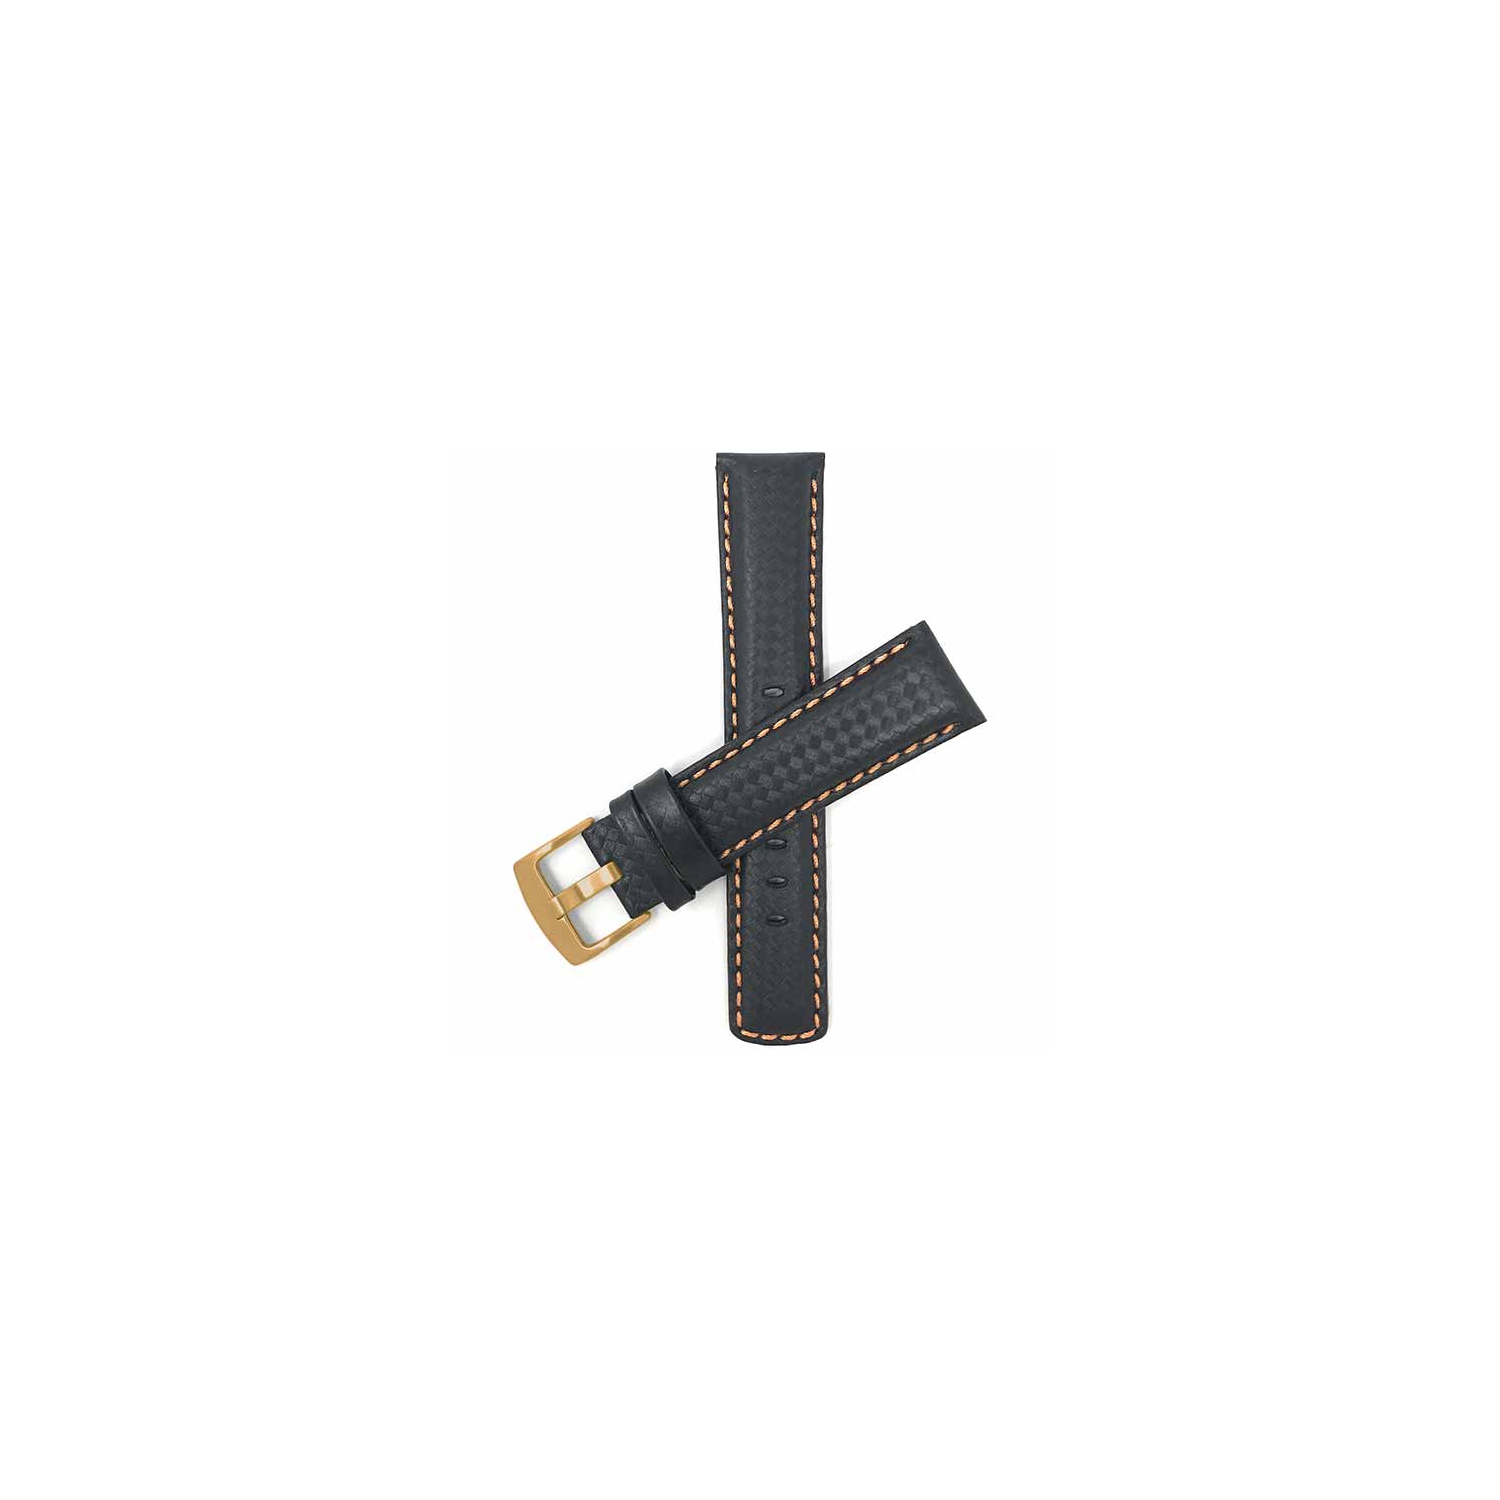 Bandini Mens Leather Carbon Fiber Pattern Smart Watch Band Strap For Garmin Venu Sq - 20mm, Black / Orange / Gold Buckle